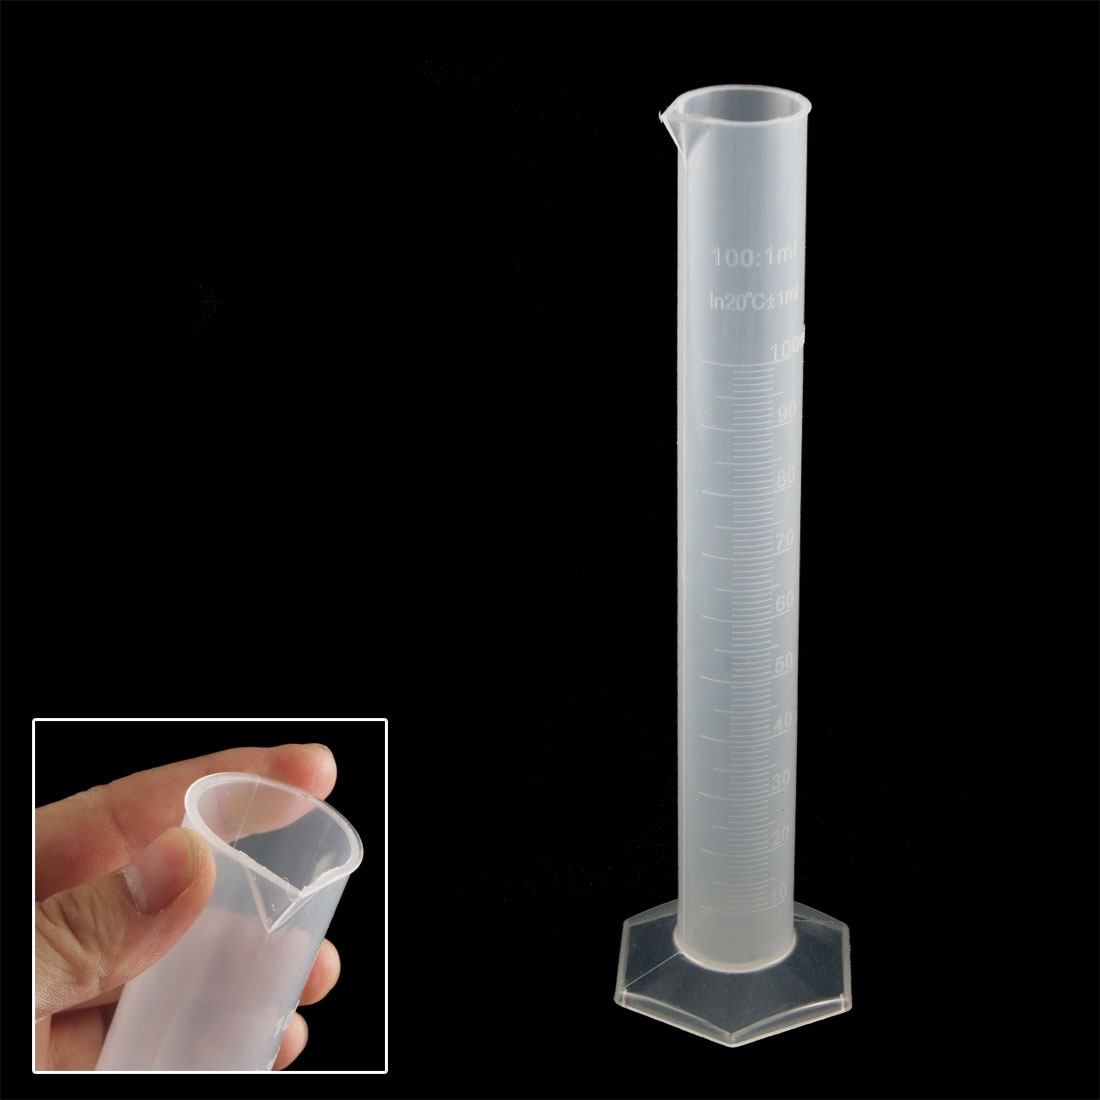 100mL Laboratorium Cilinder Voor Lab Chemie Meetinstrument Plastic Afgestudeerd Cilinder Quimica Laboratorio Cilinder Onderwijs Tool